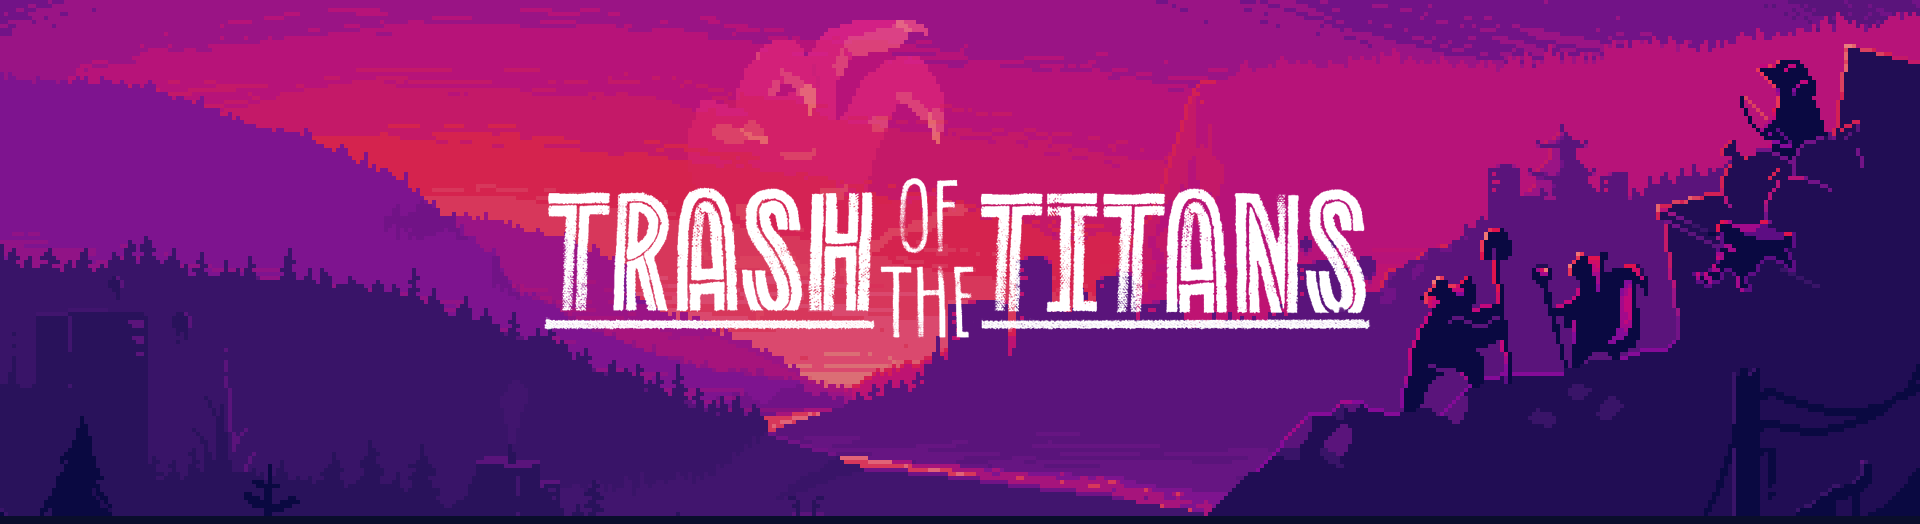 Trash of the Titans